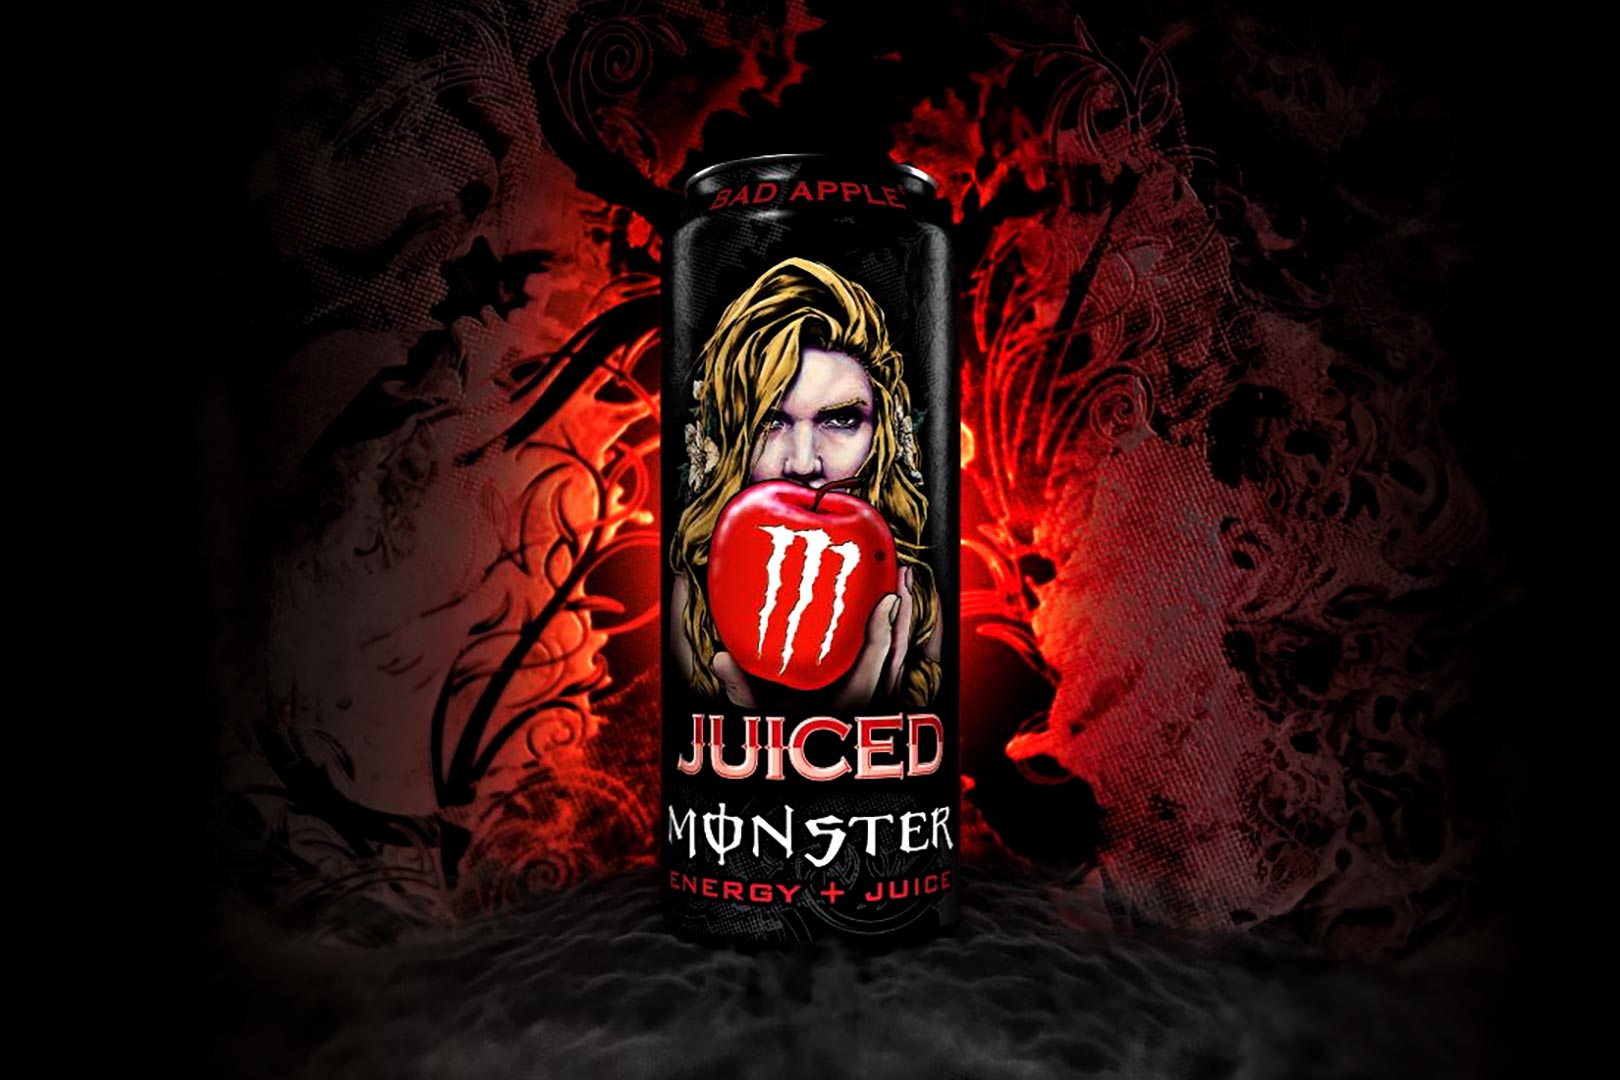 Monster Juiced Bad Apple